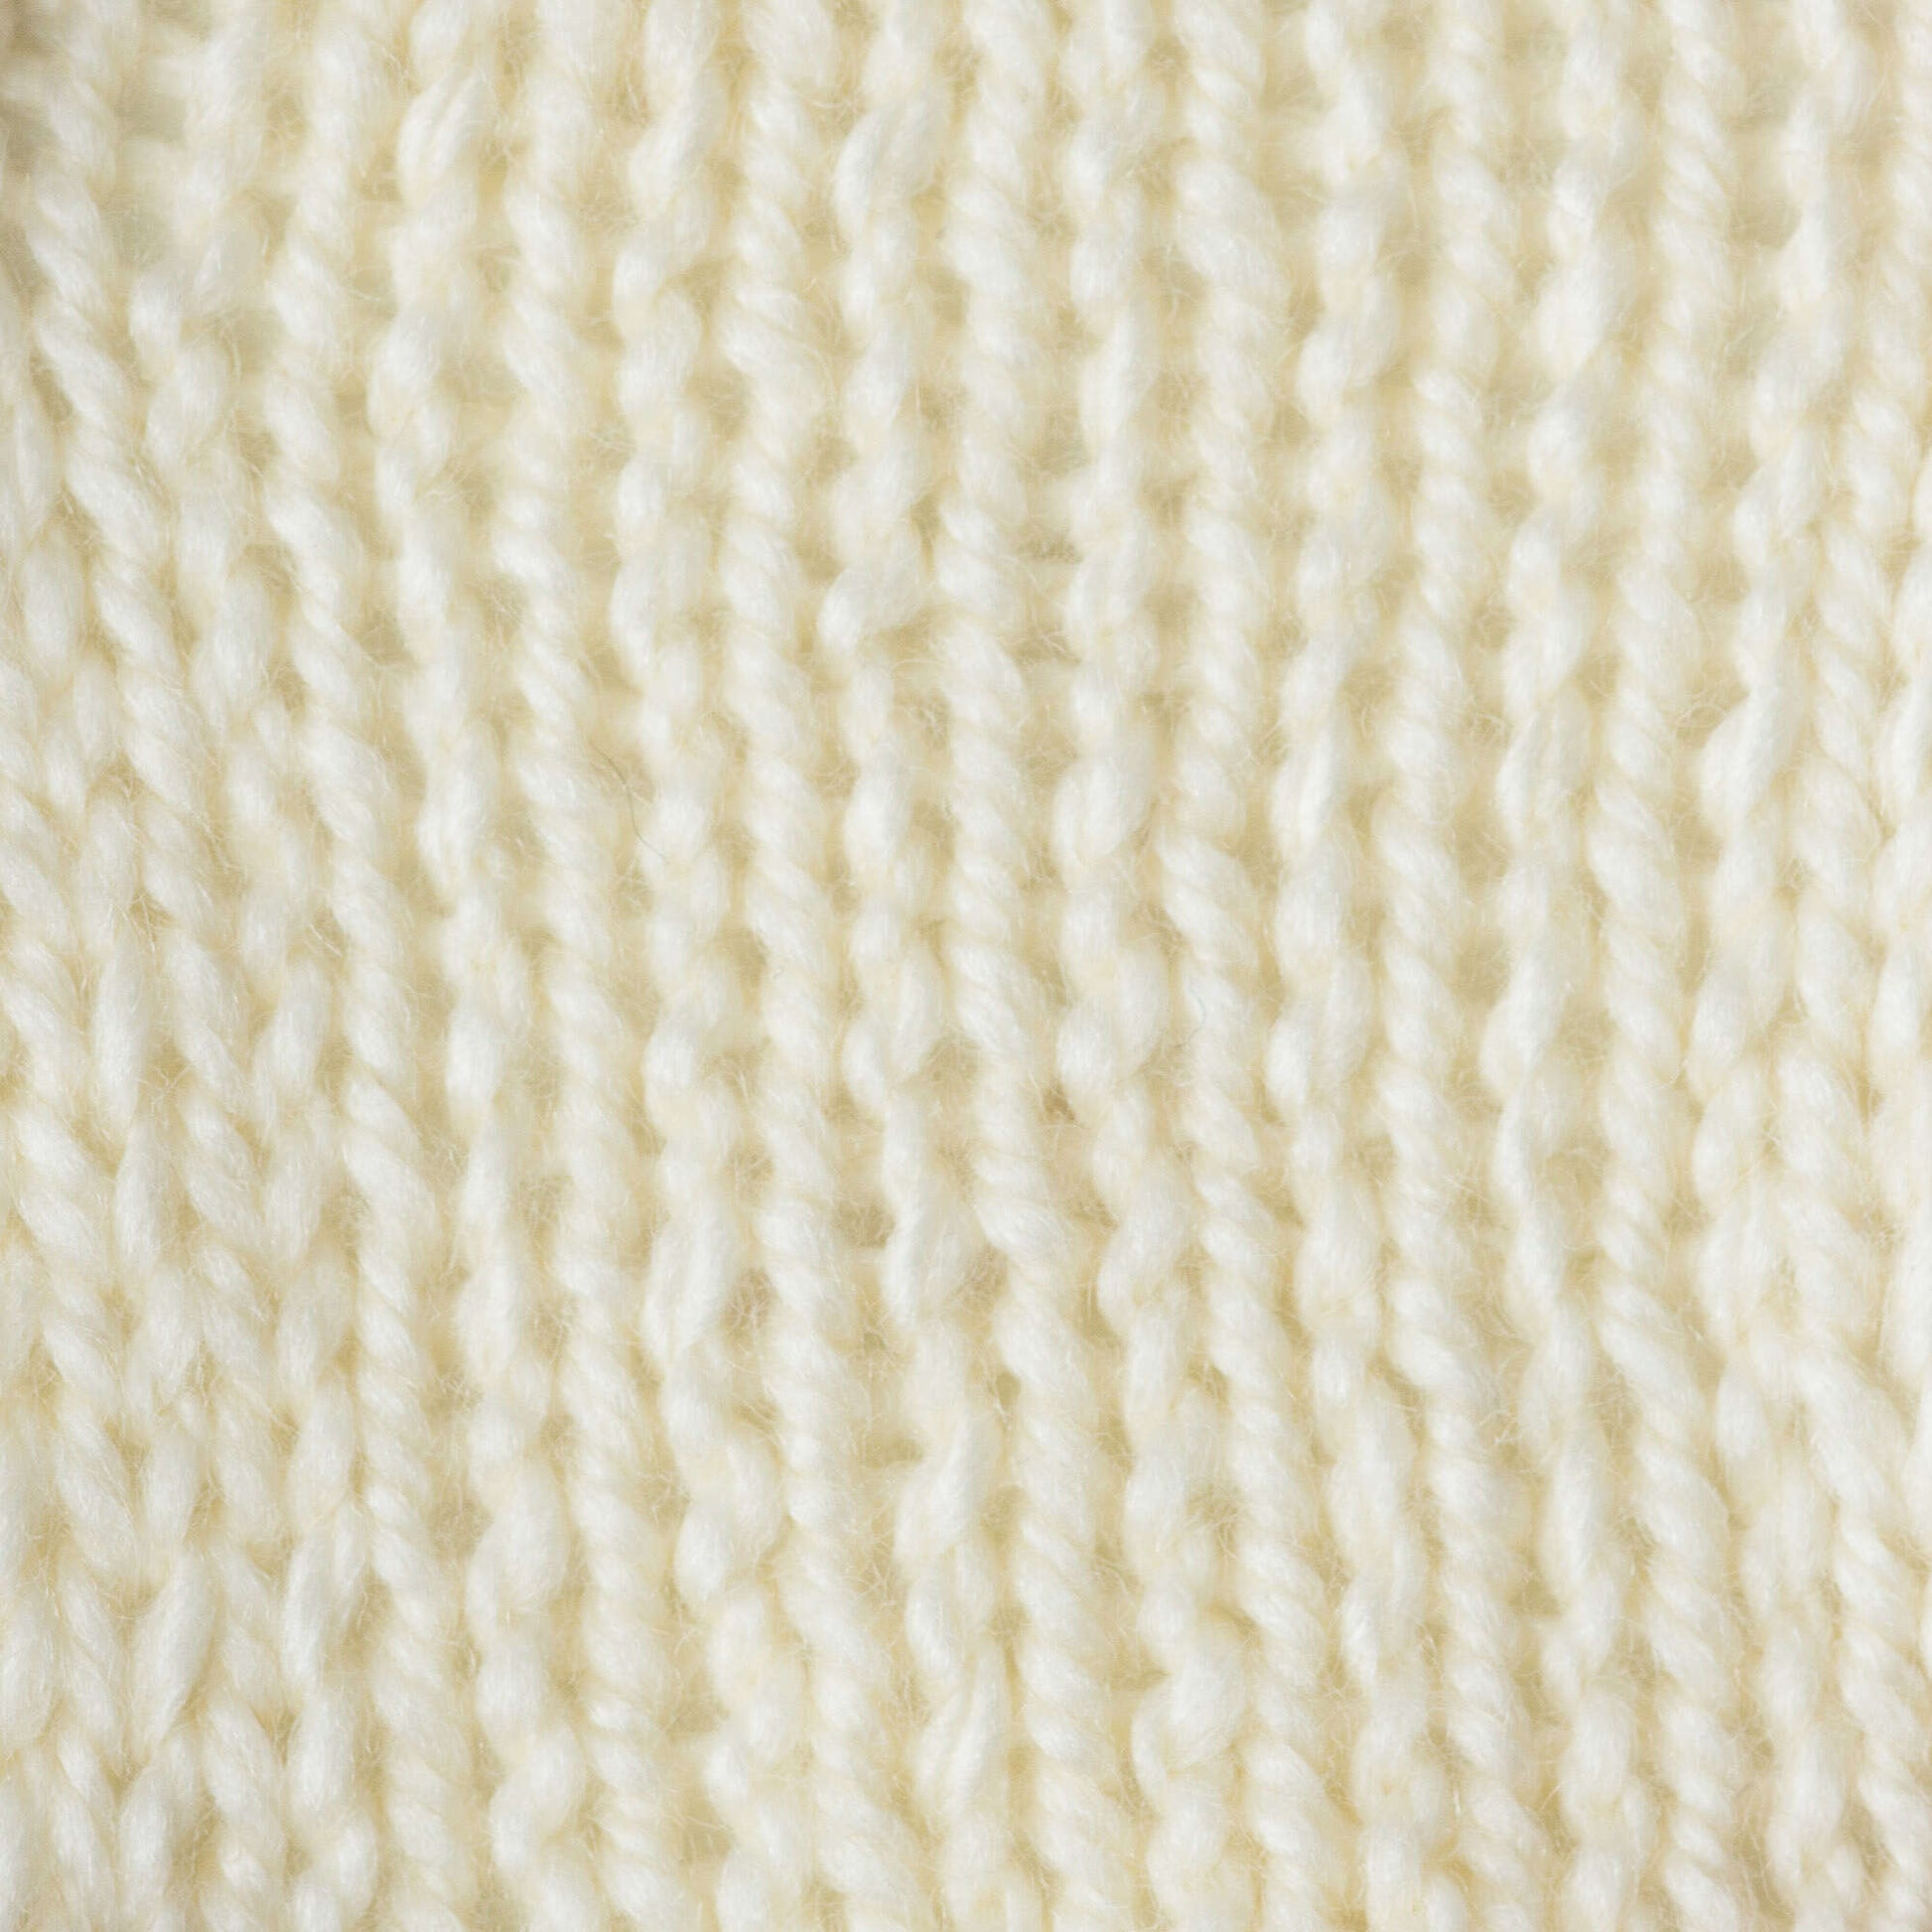 Patons Shetland Chunky Yarn - Clearance Shades* Aran